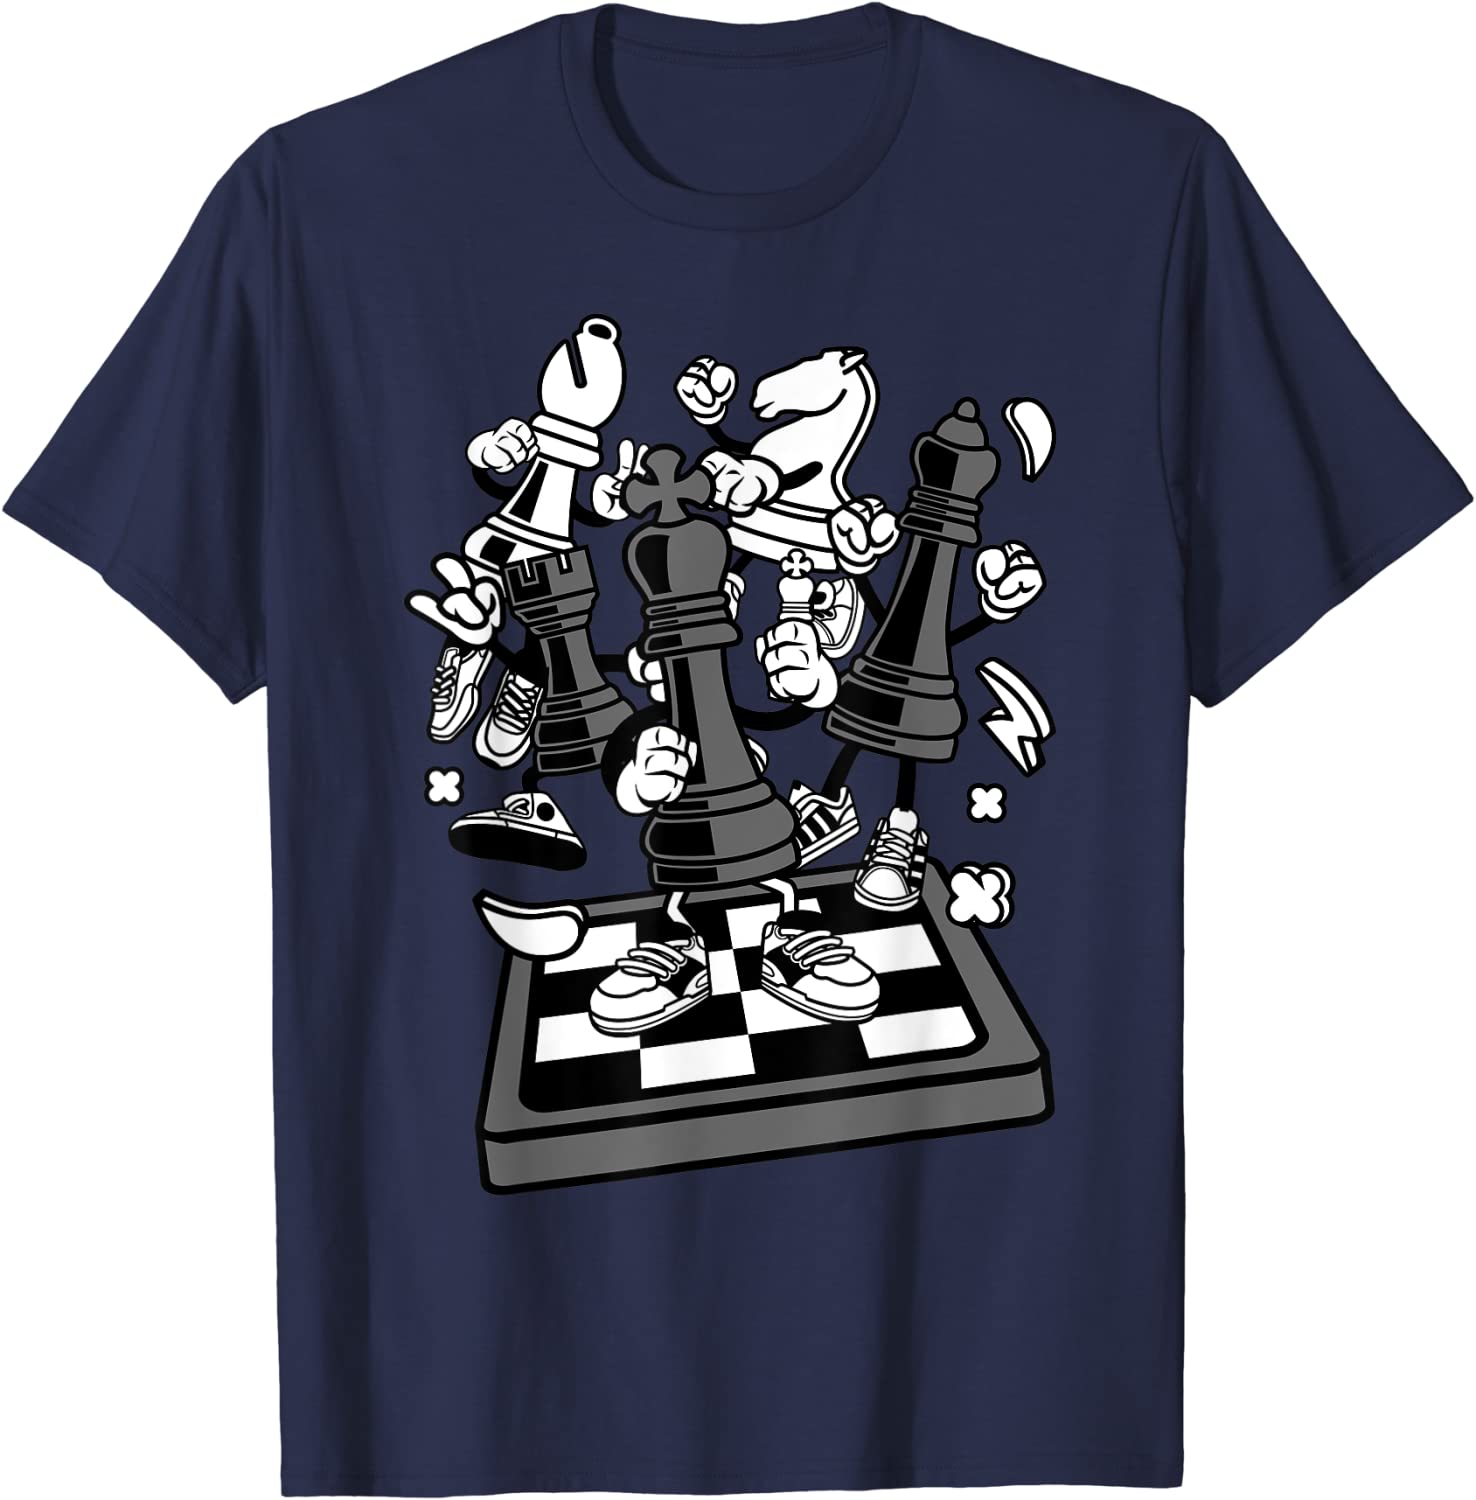 Chess T Shirt Design